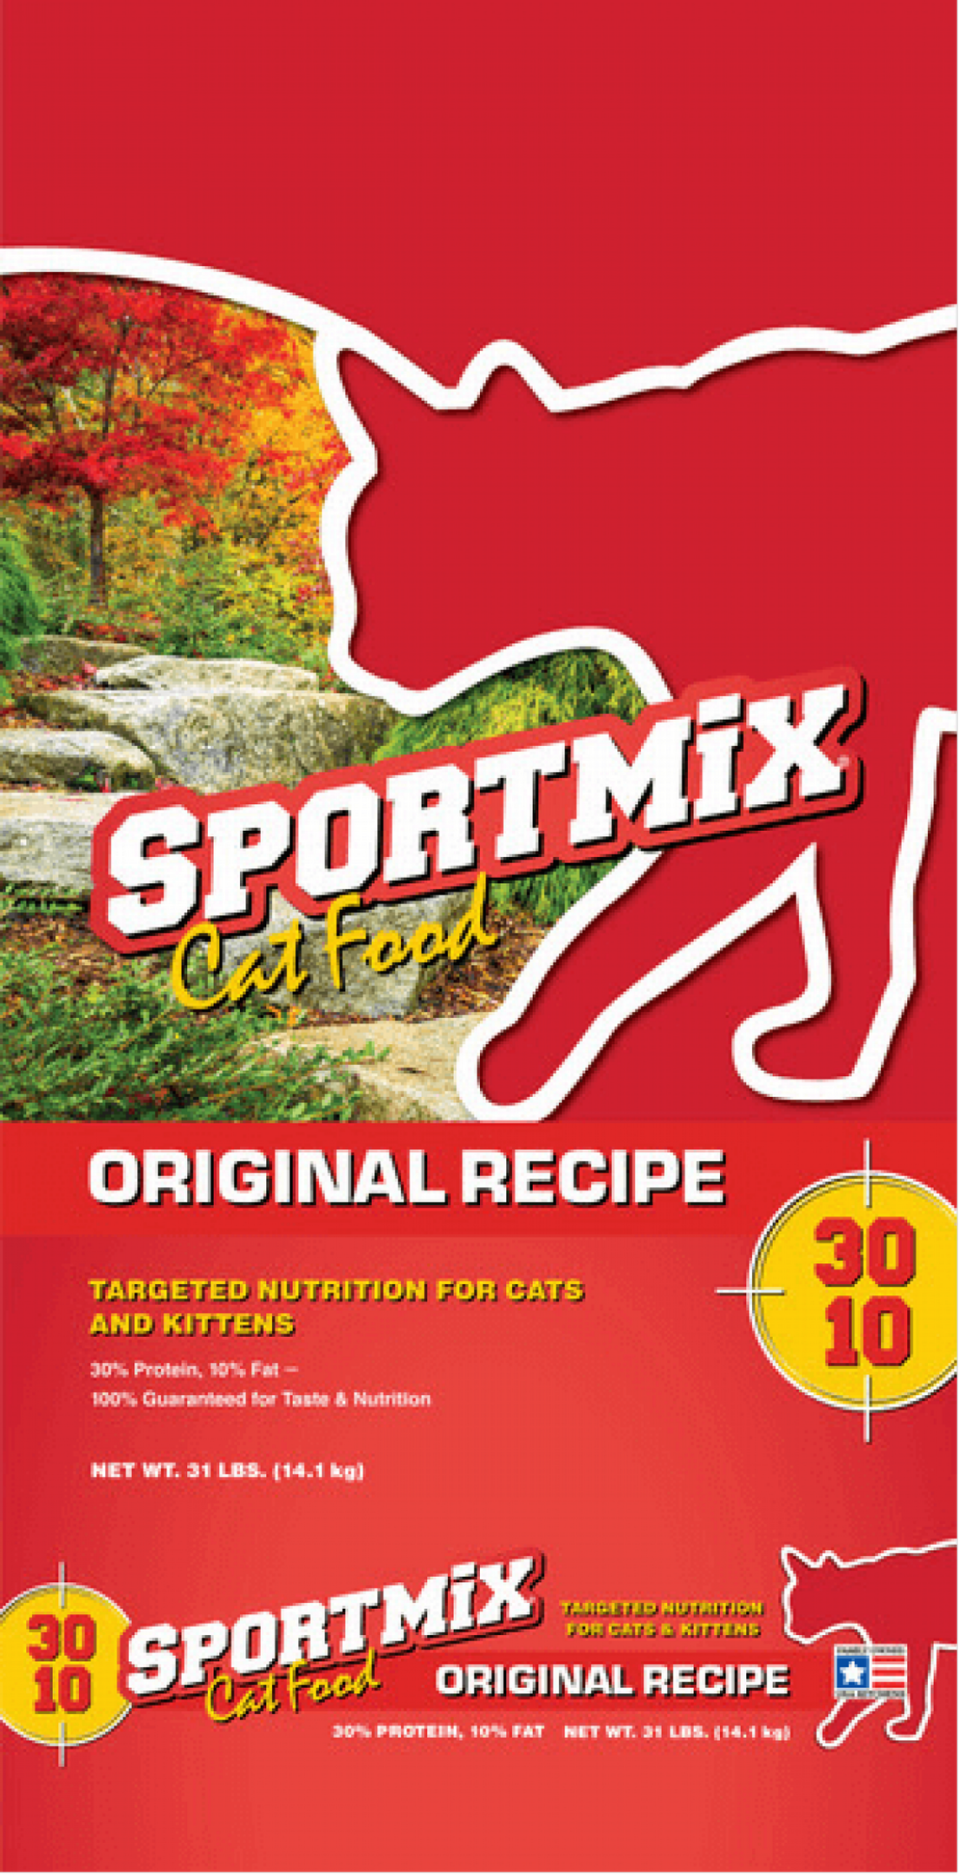 Sportmix Original Recipe Cat Food